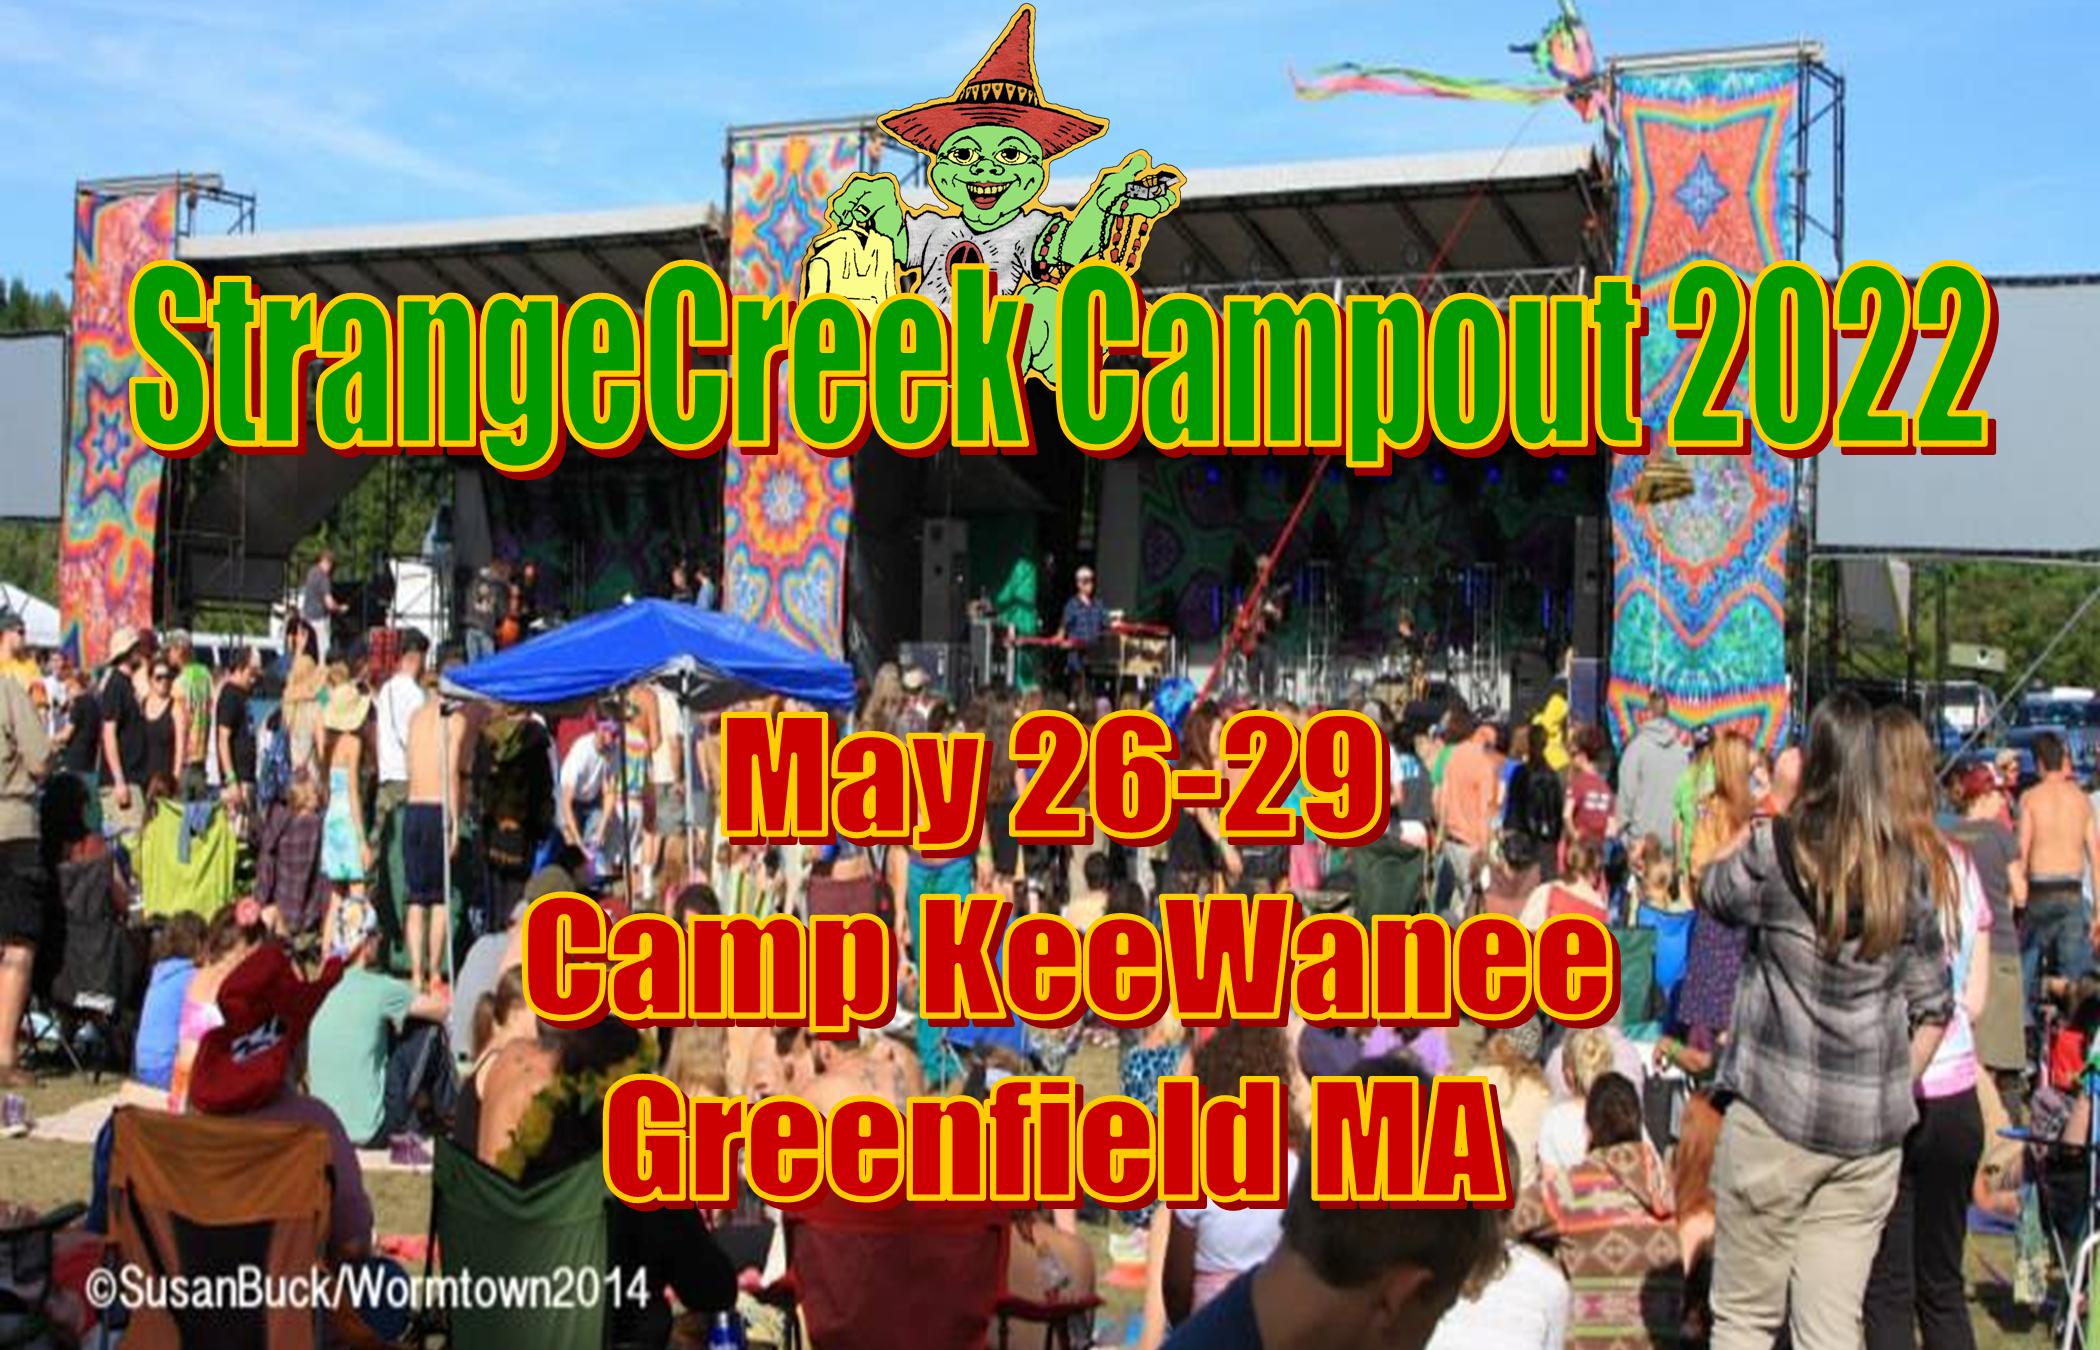 StrangeCreek Campout 2022, May 26-29, Camp KeeWanee, Greenfield MA